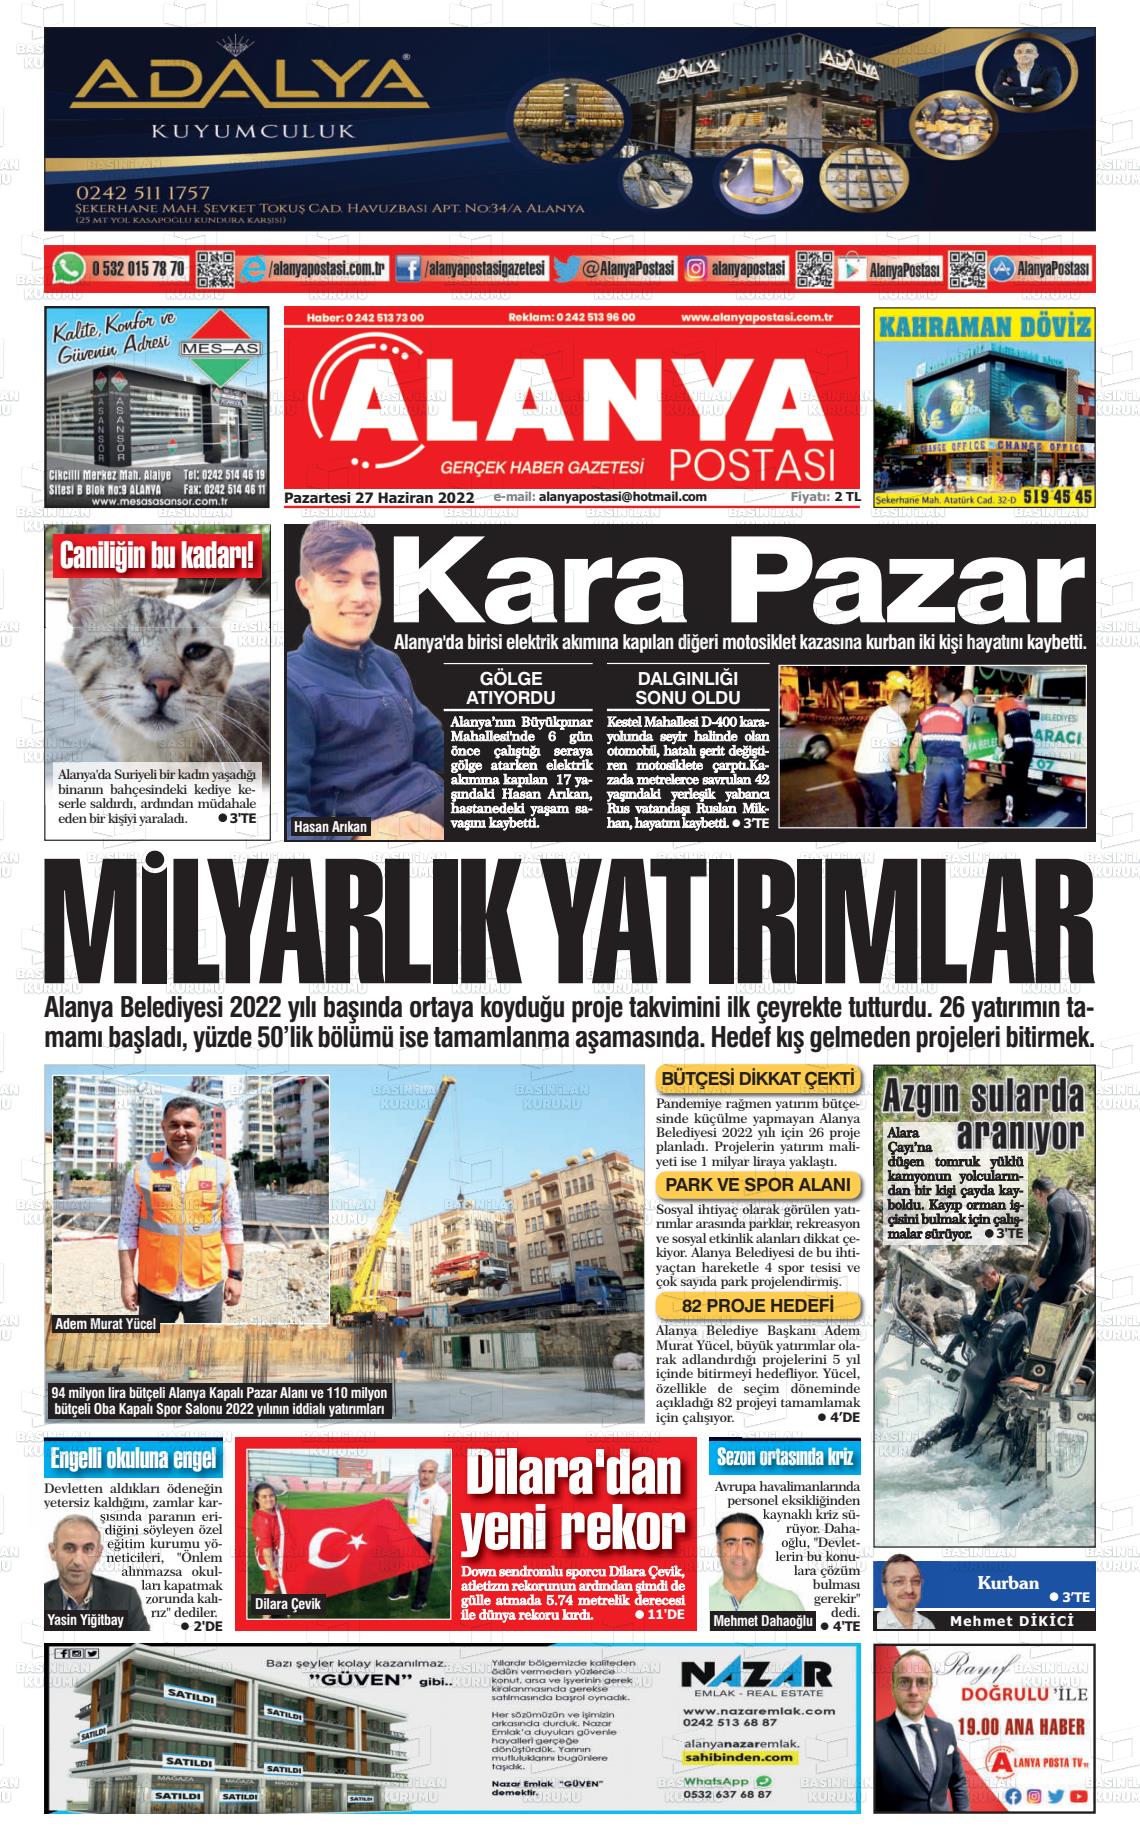 27 Haziran 2022 Alanya Postası Gazete Manşeti